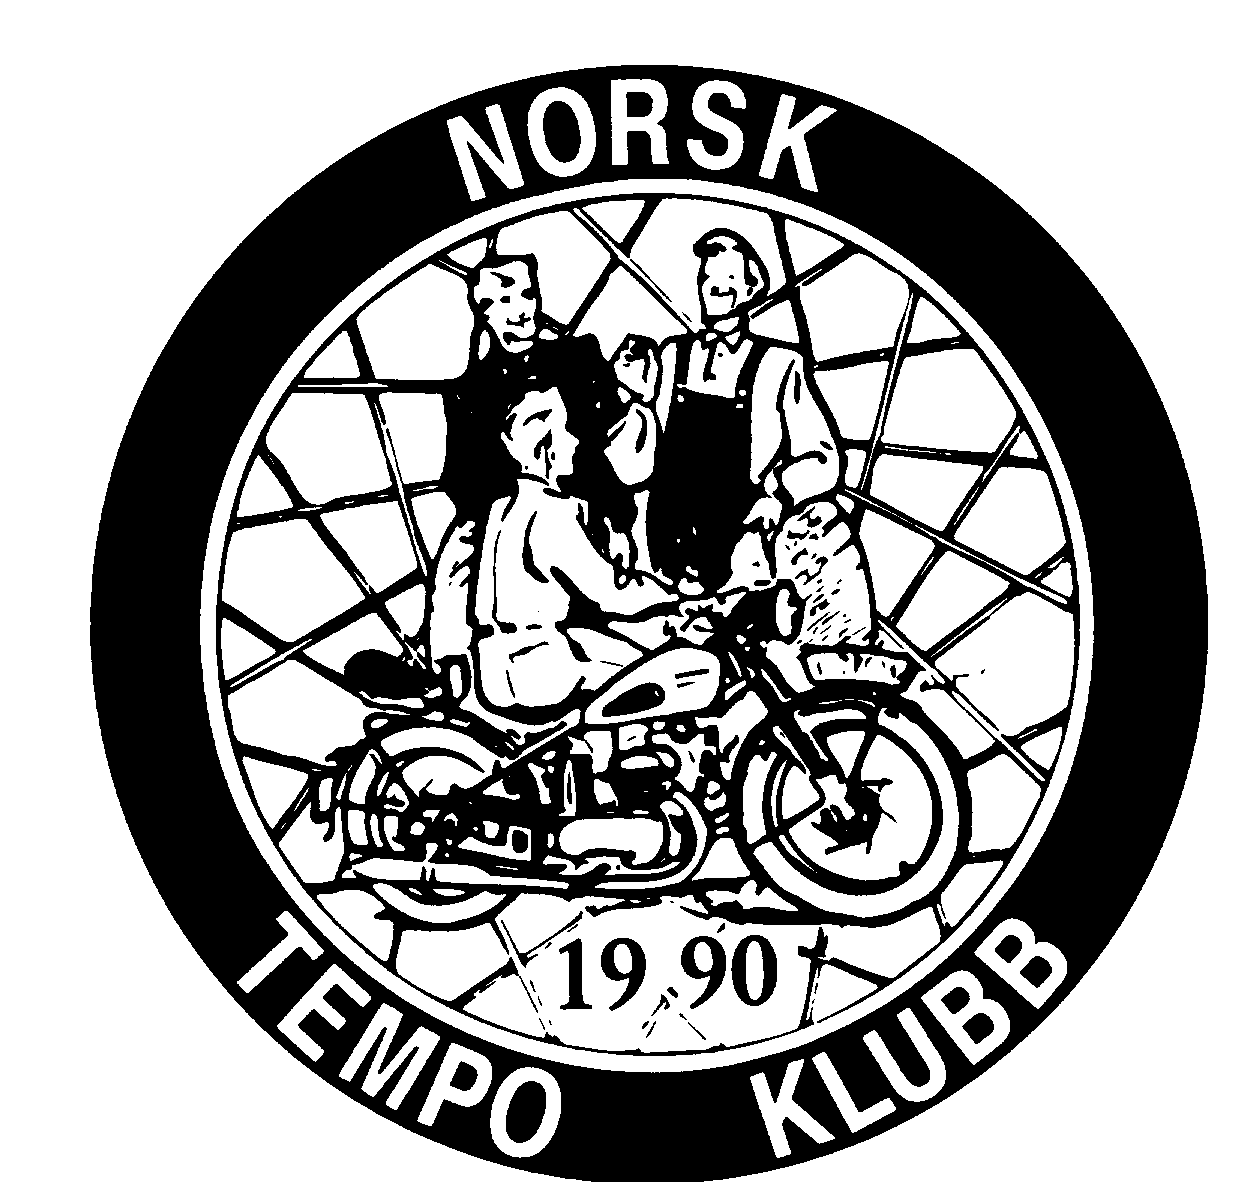 Norsk Tempoklubb